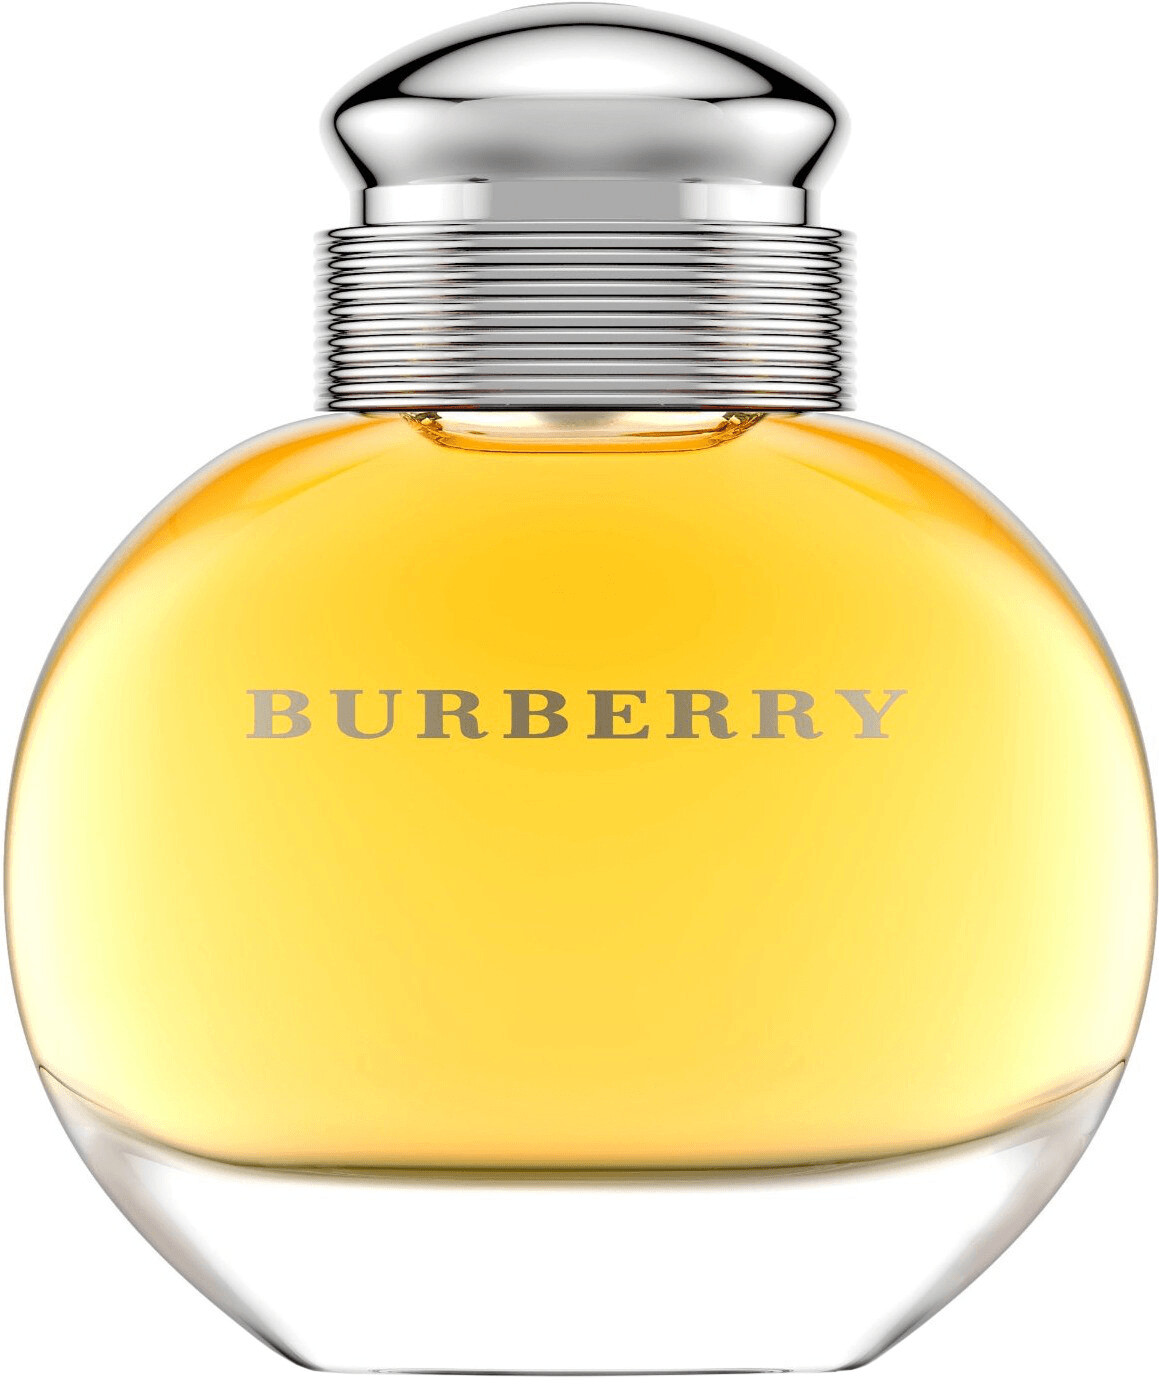 Burberry for Women Eau de Parfum (50ml)